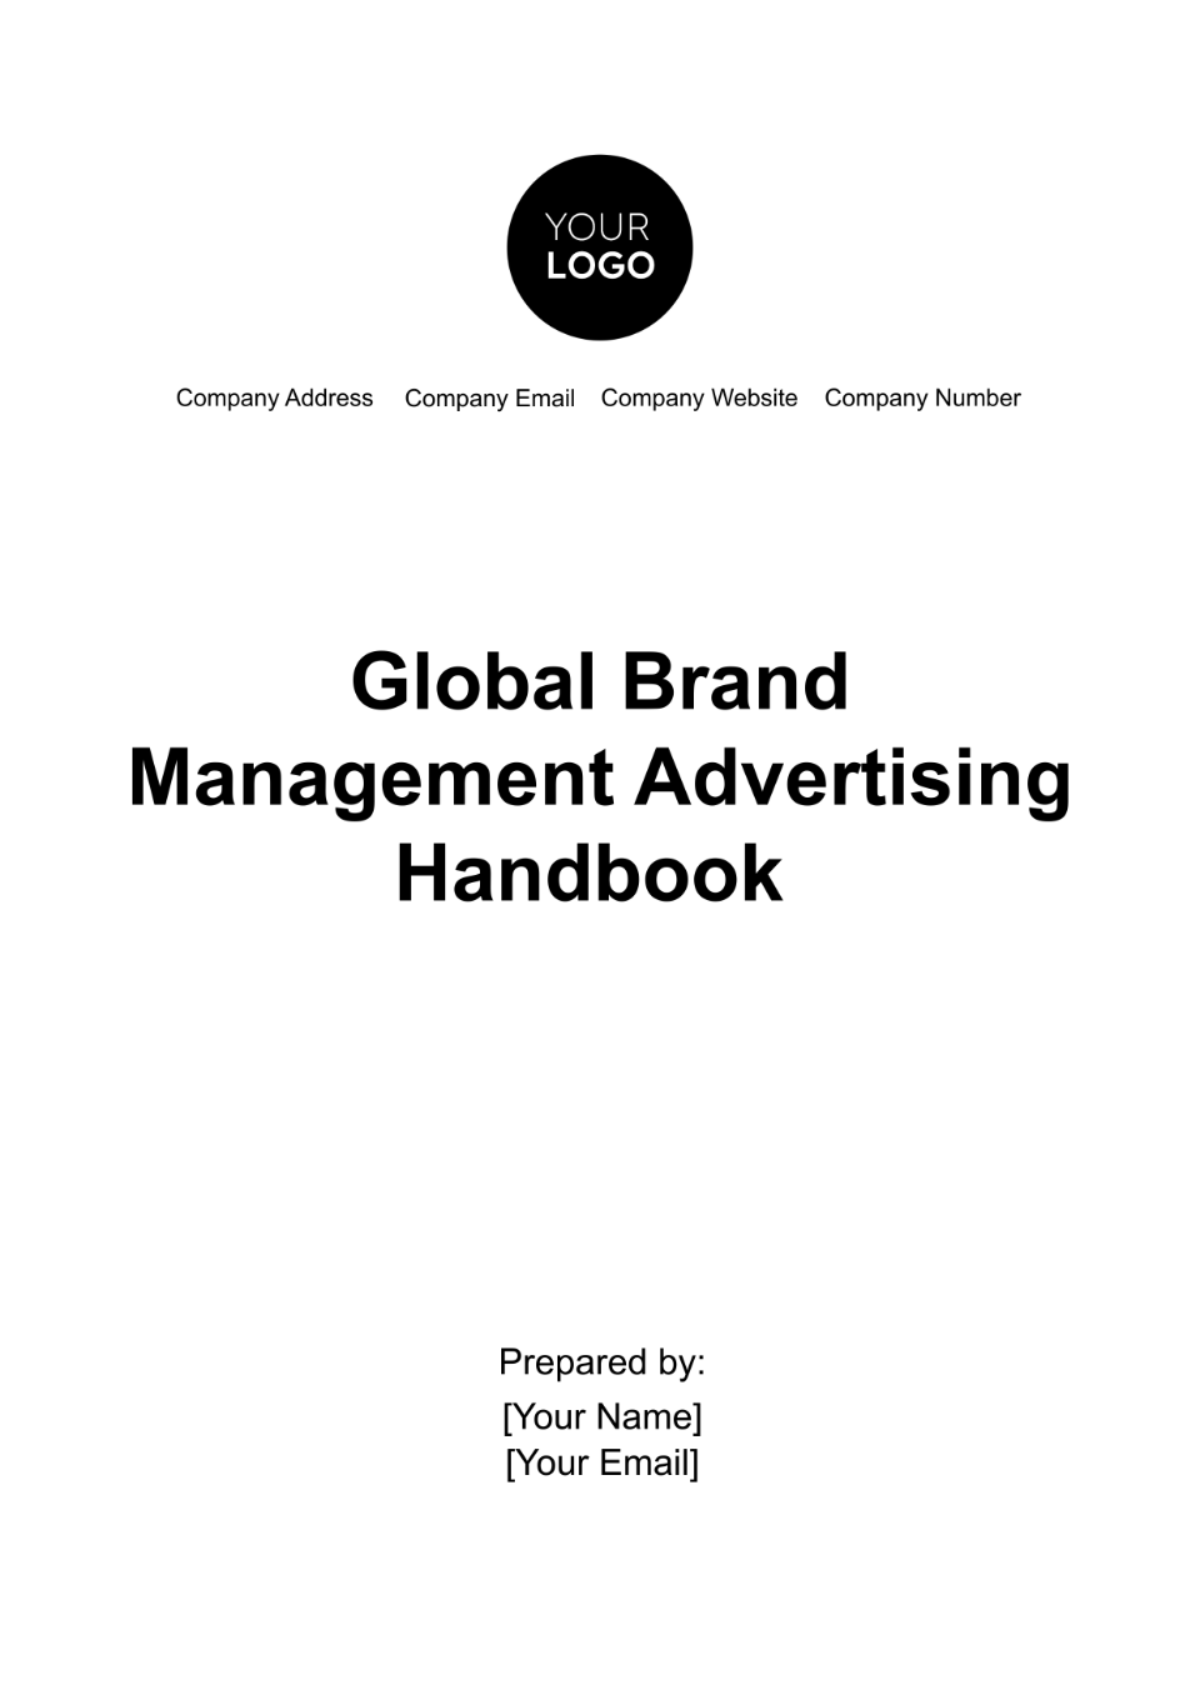 Global Brand Management Advertising Handbook Template